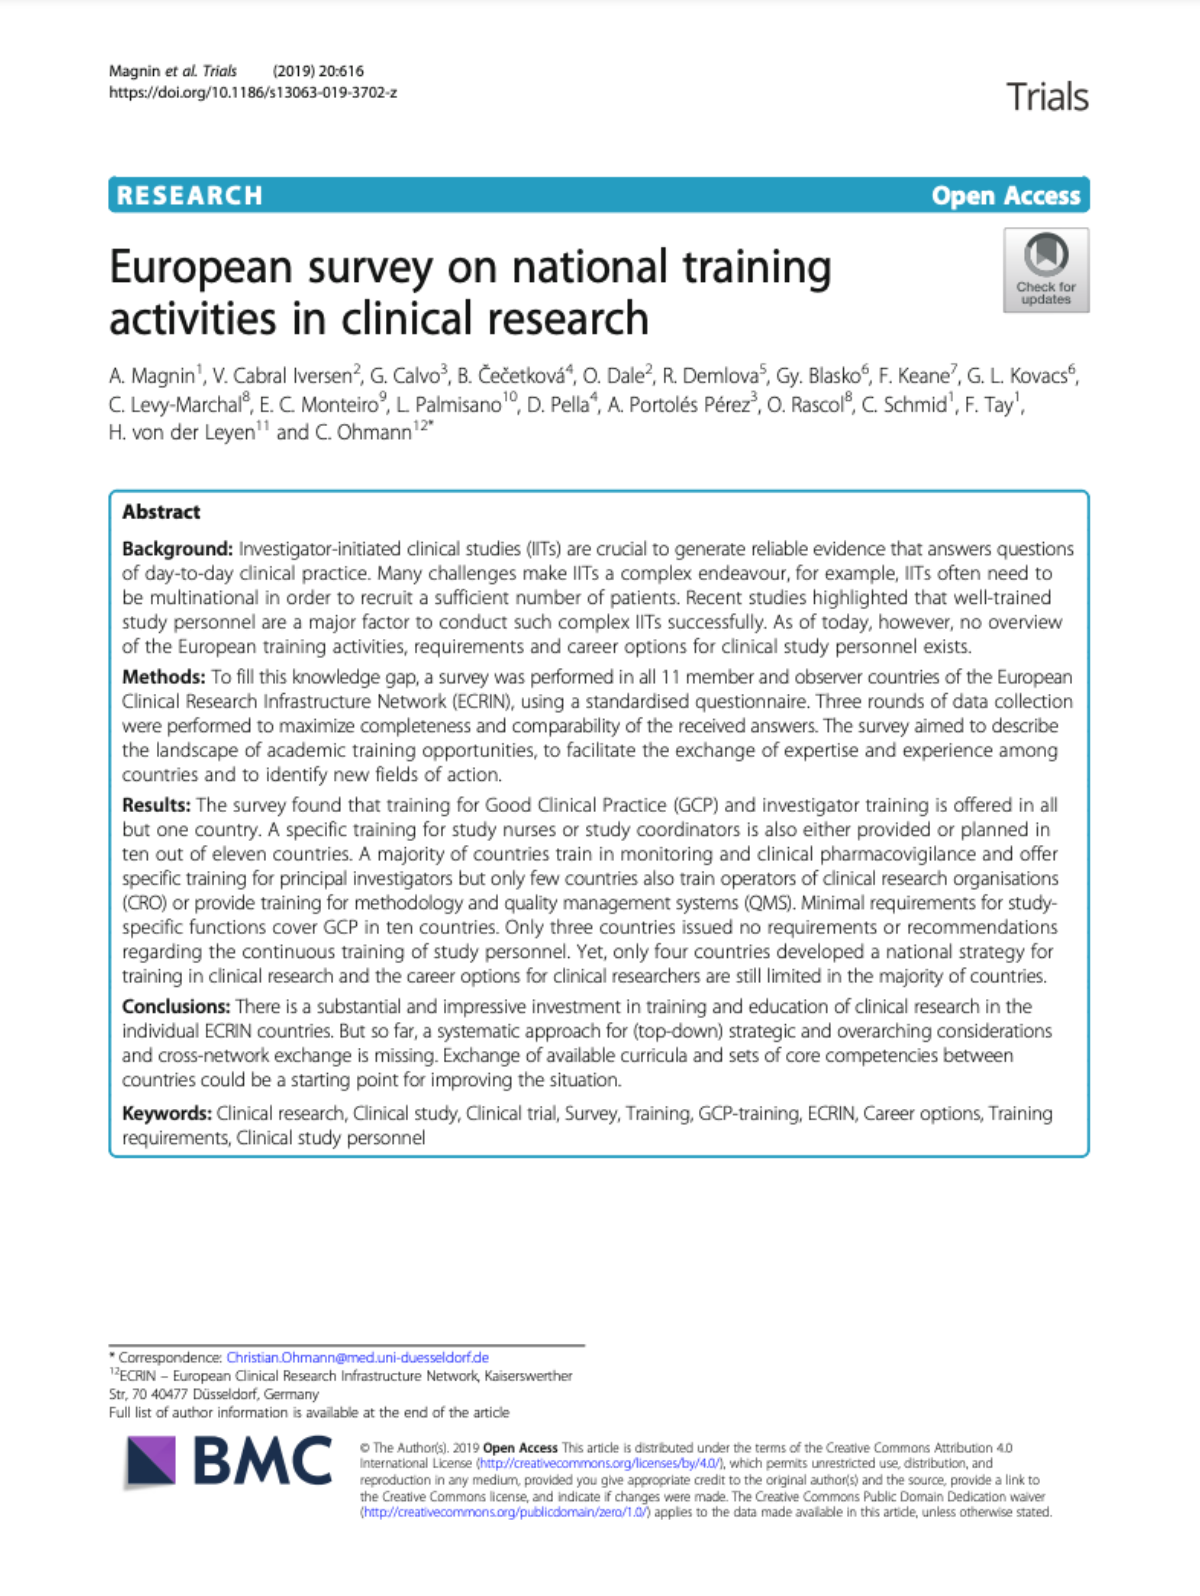 Trials Journal European survey on national training